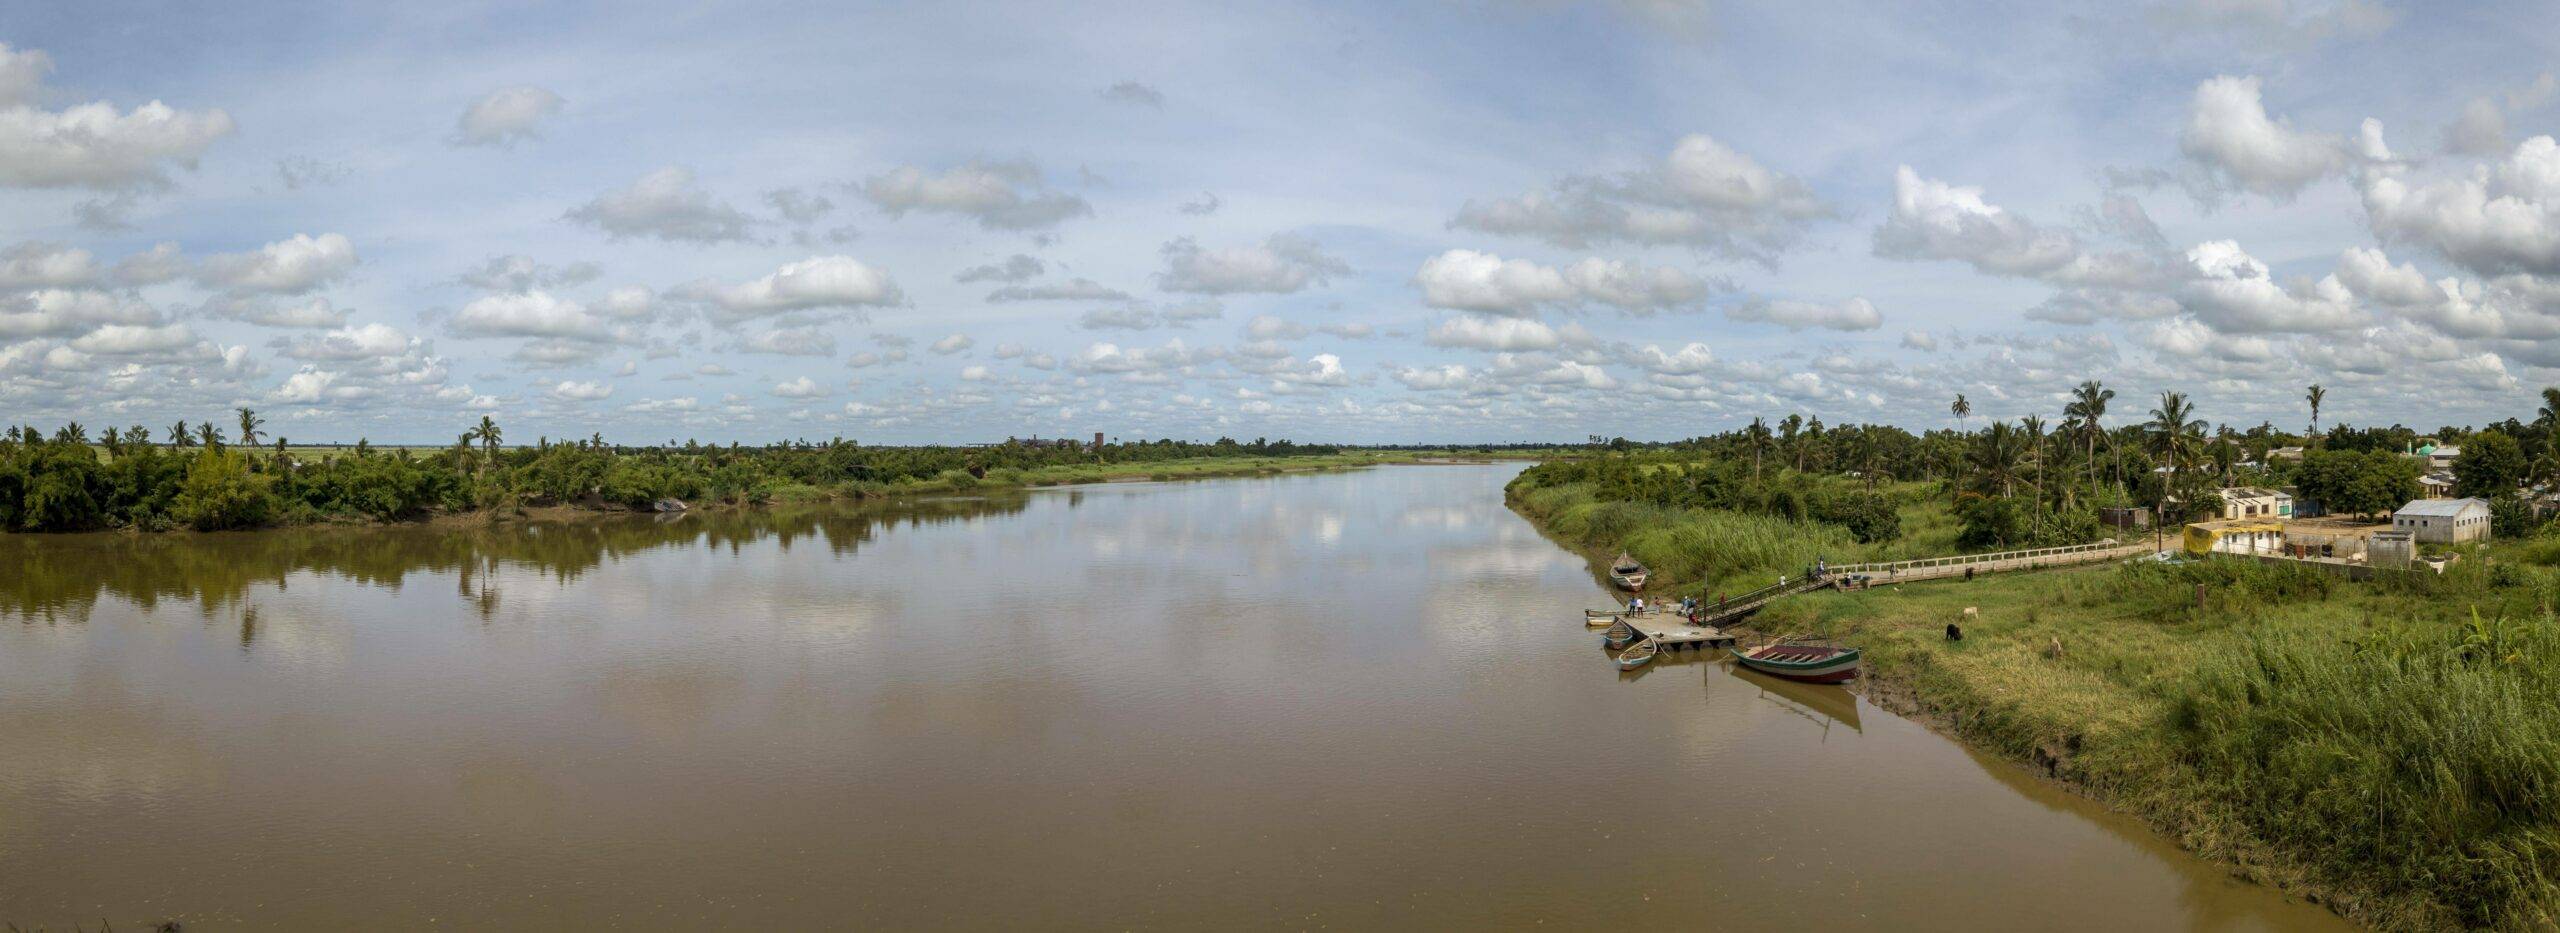 Landscape panorama on the Buzi River, Buzi, Sofala Province, Mozambique, Africa/ibxszn05777392/imageBROKER.com/Michael Szoenyi/SIPA/2006171505